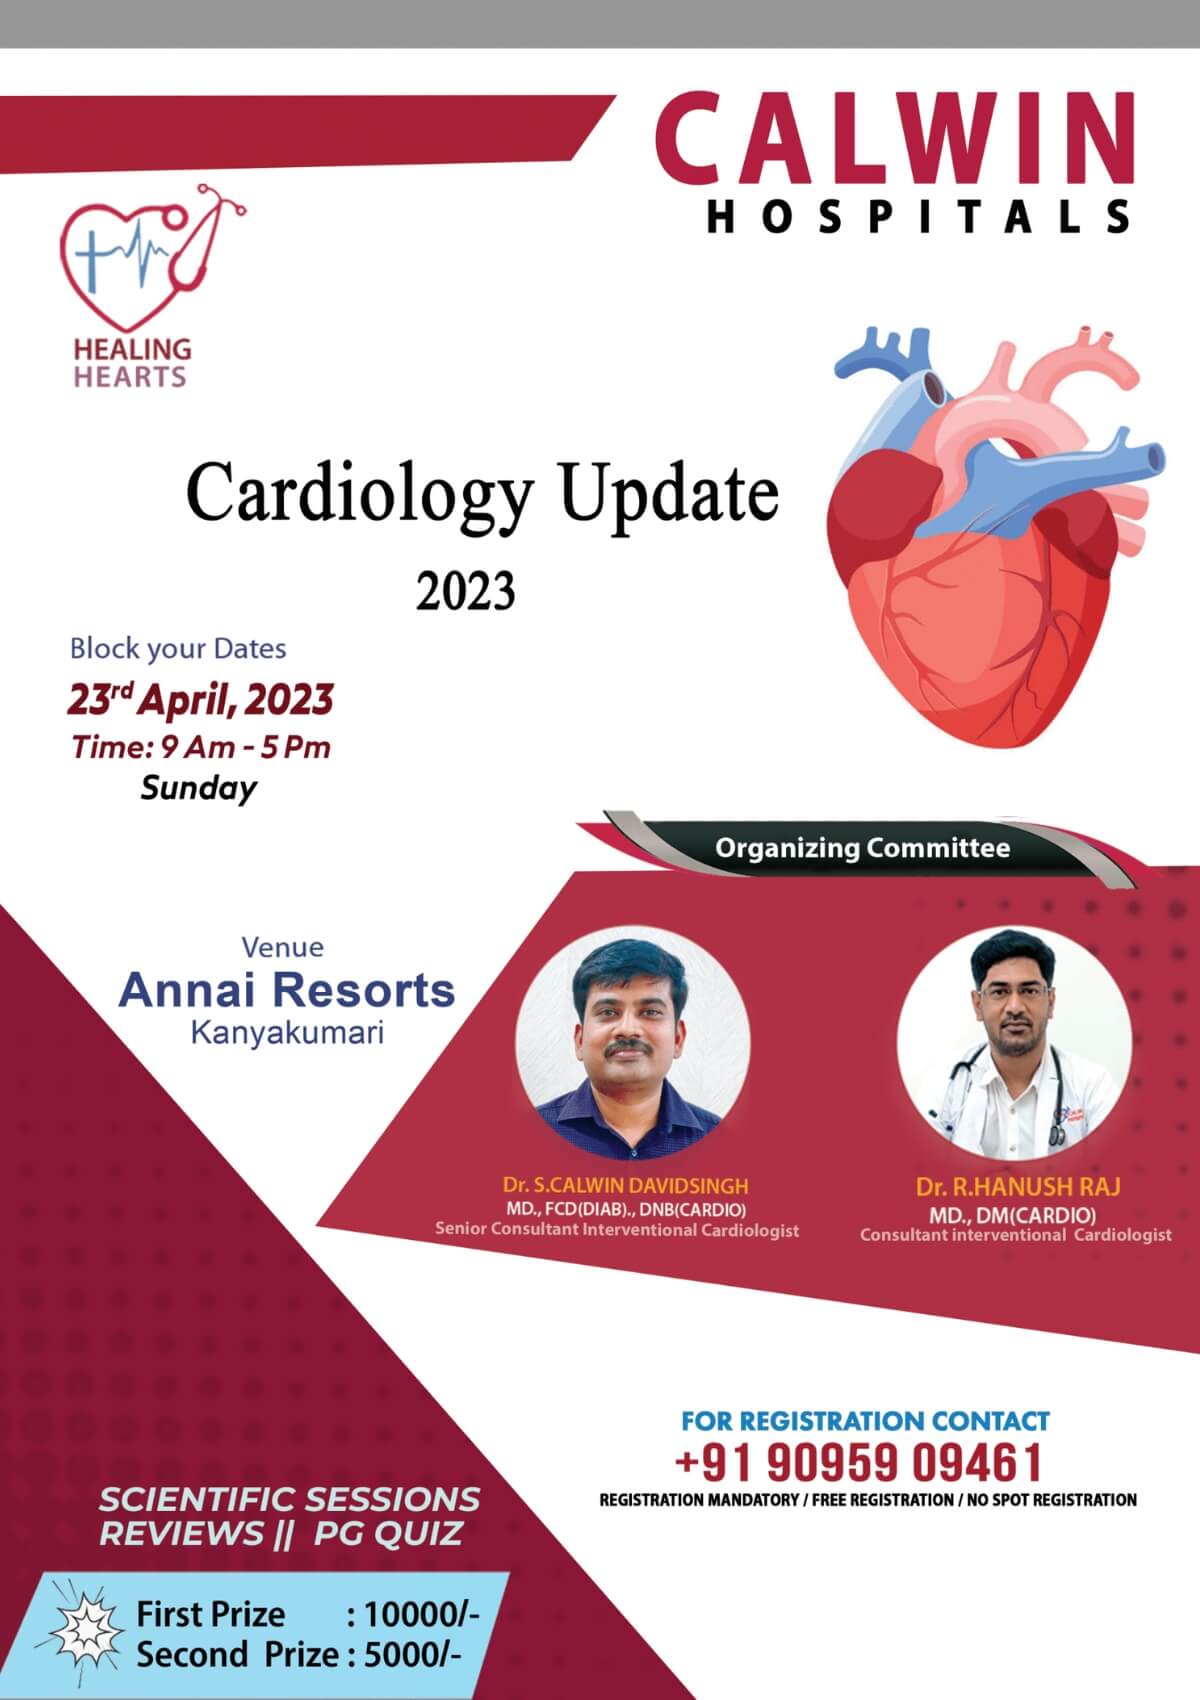 Cardiology Update 2023 Calwin Hopitals